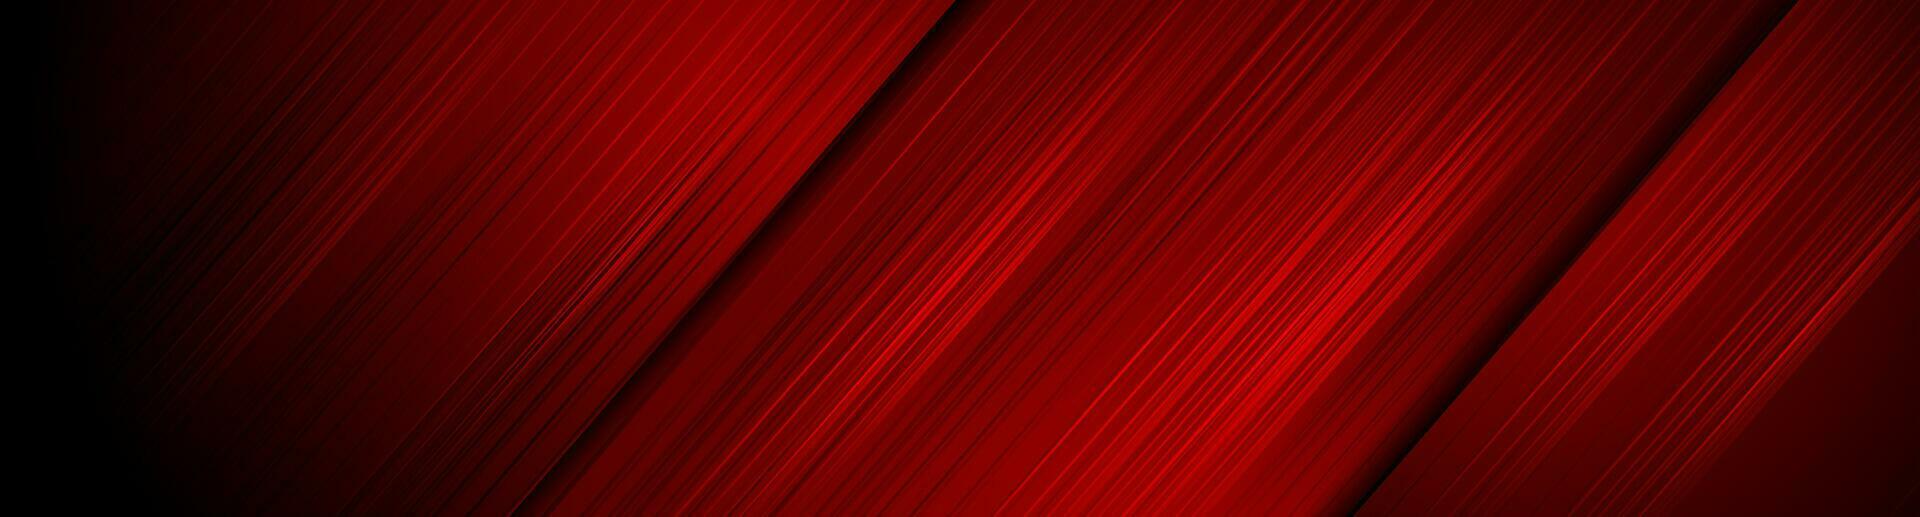 donker rood lijnen abstract tech futuristische achtergrond vector